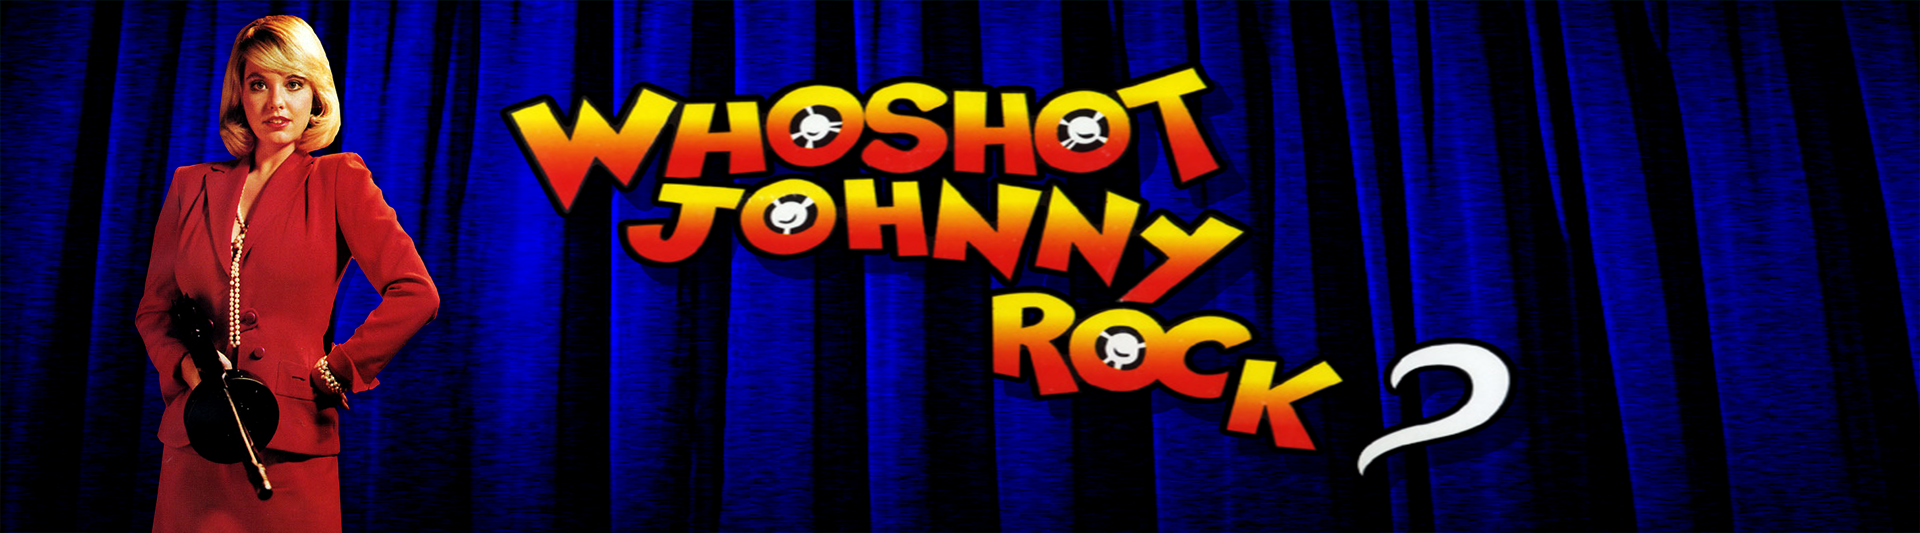 who shot johnny rock arcade